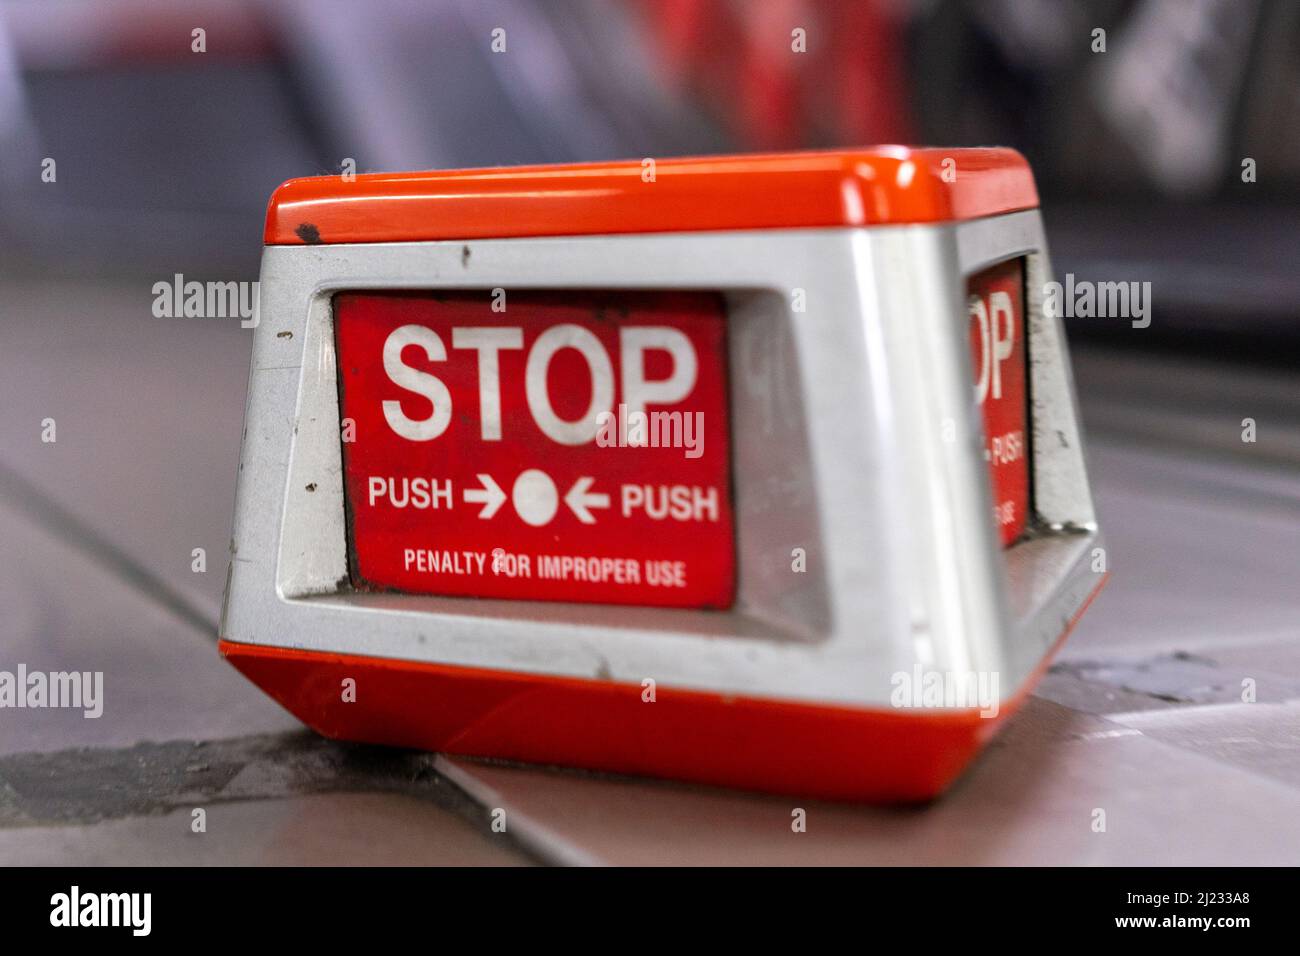 London Underground Escalator Stop Sign Stock Photo